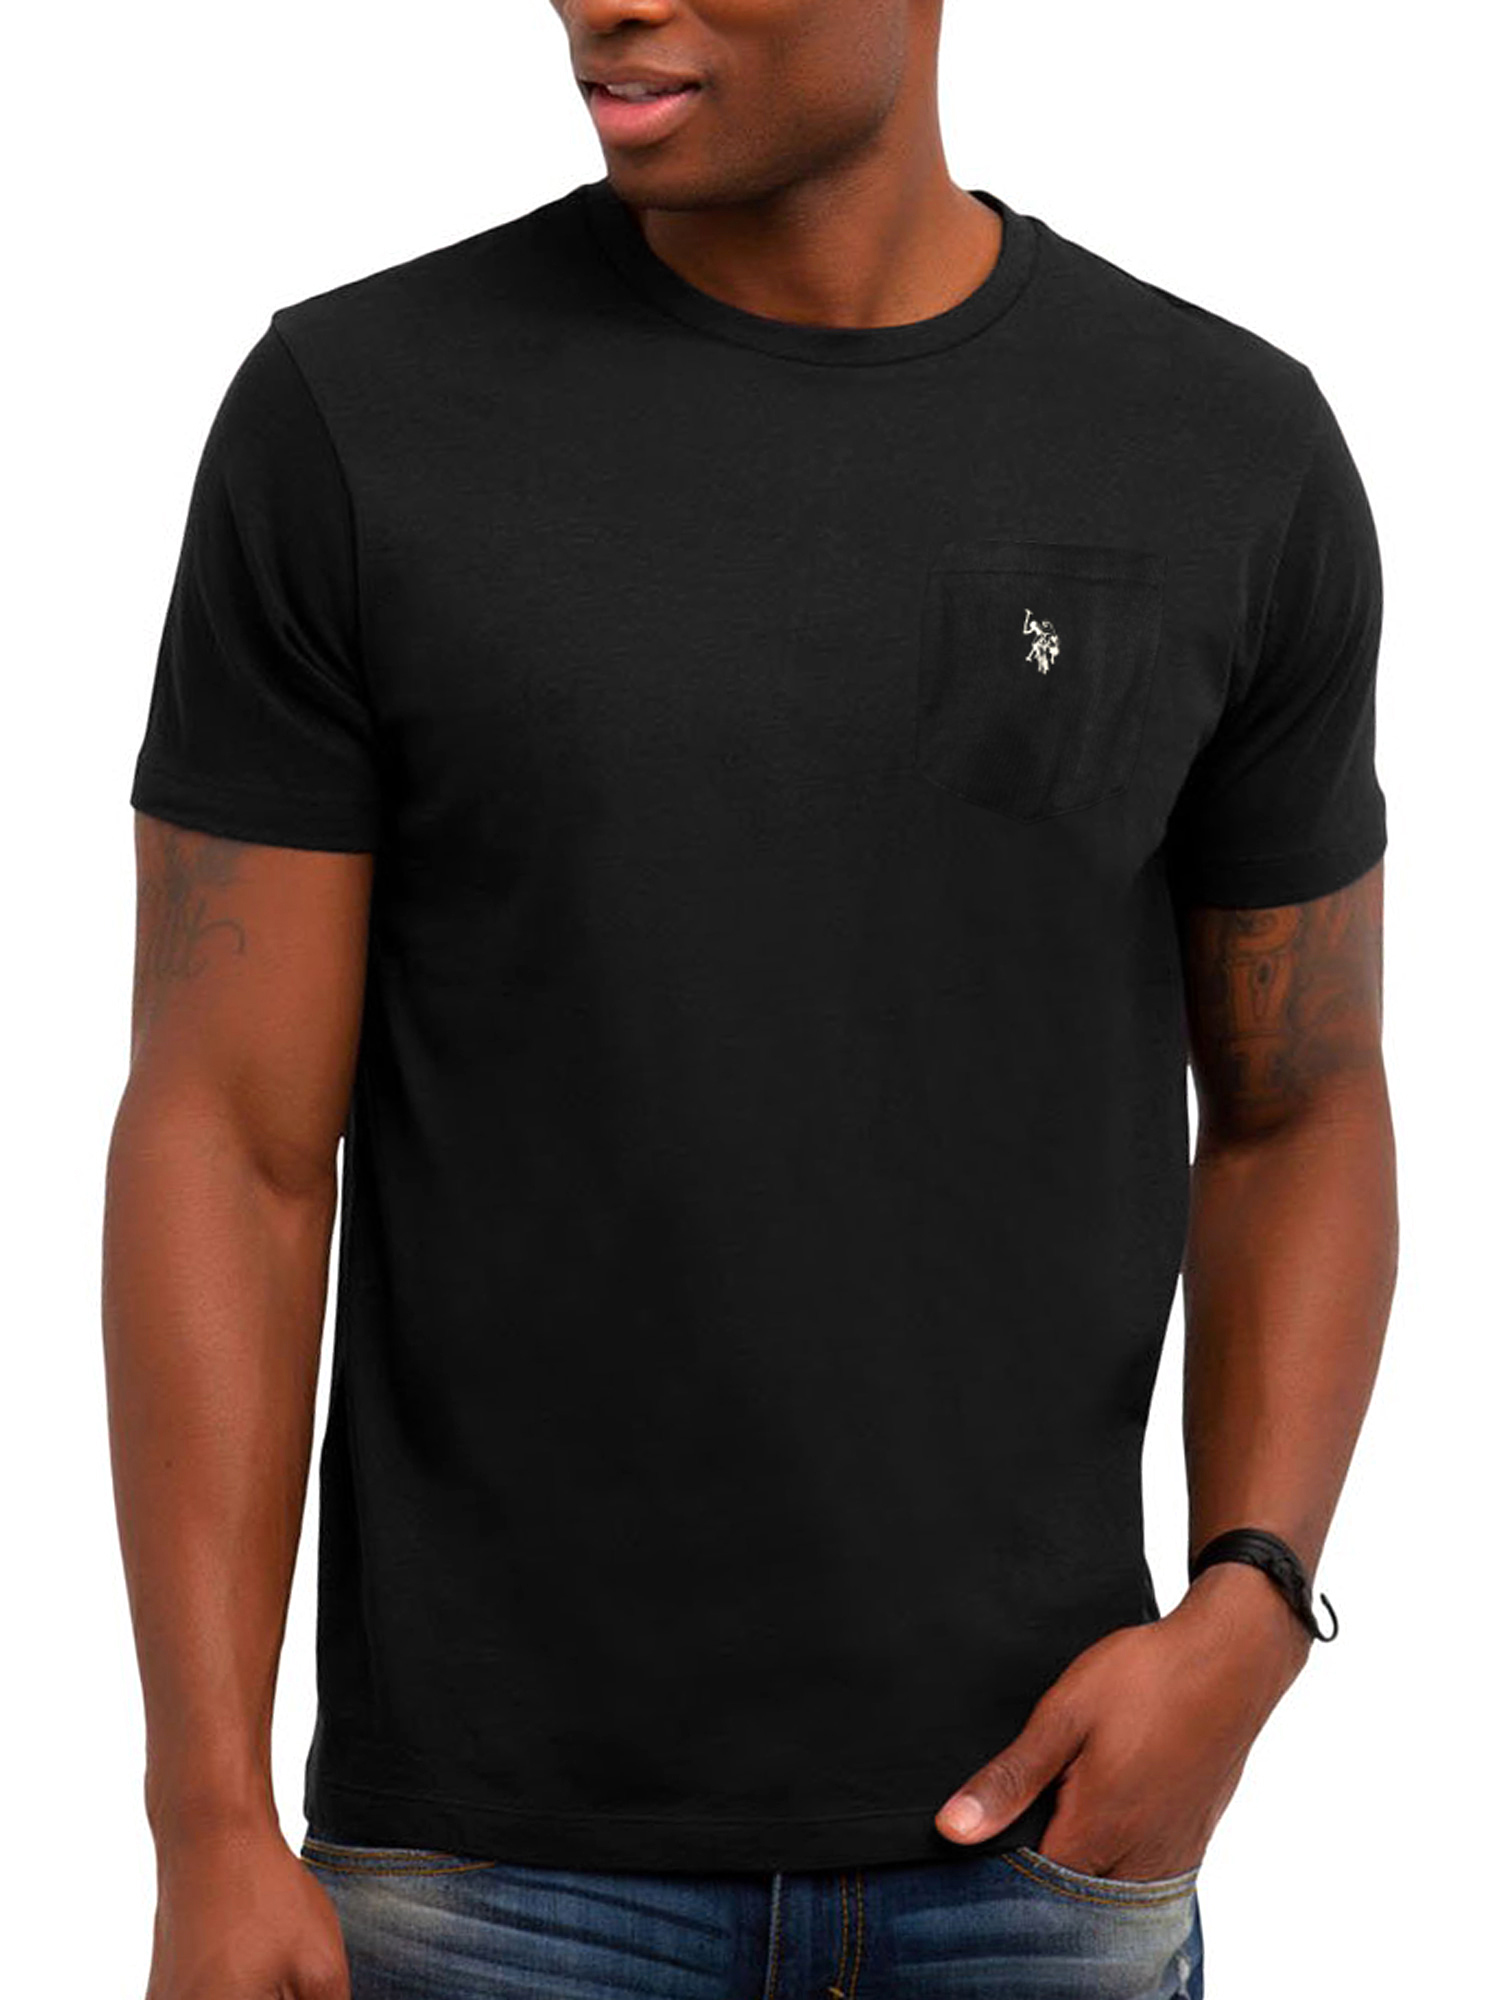 U.S. Polo Assn. Men's Pocket T-Shirt - image 1 of 3